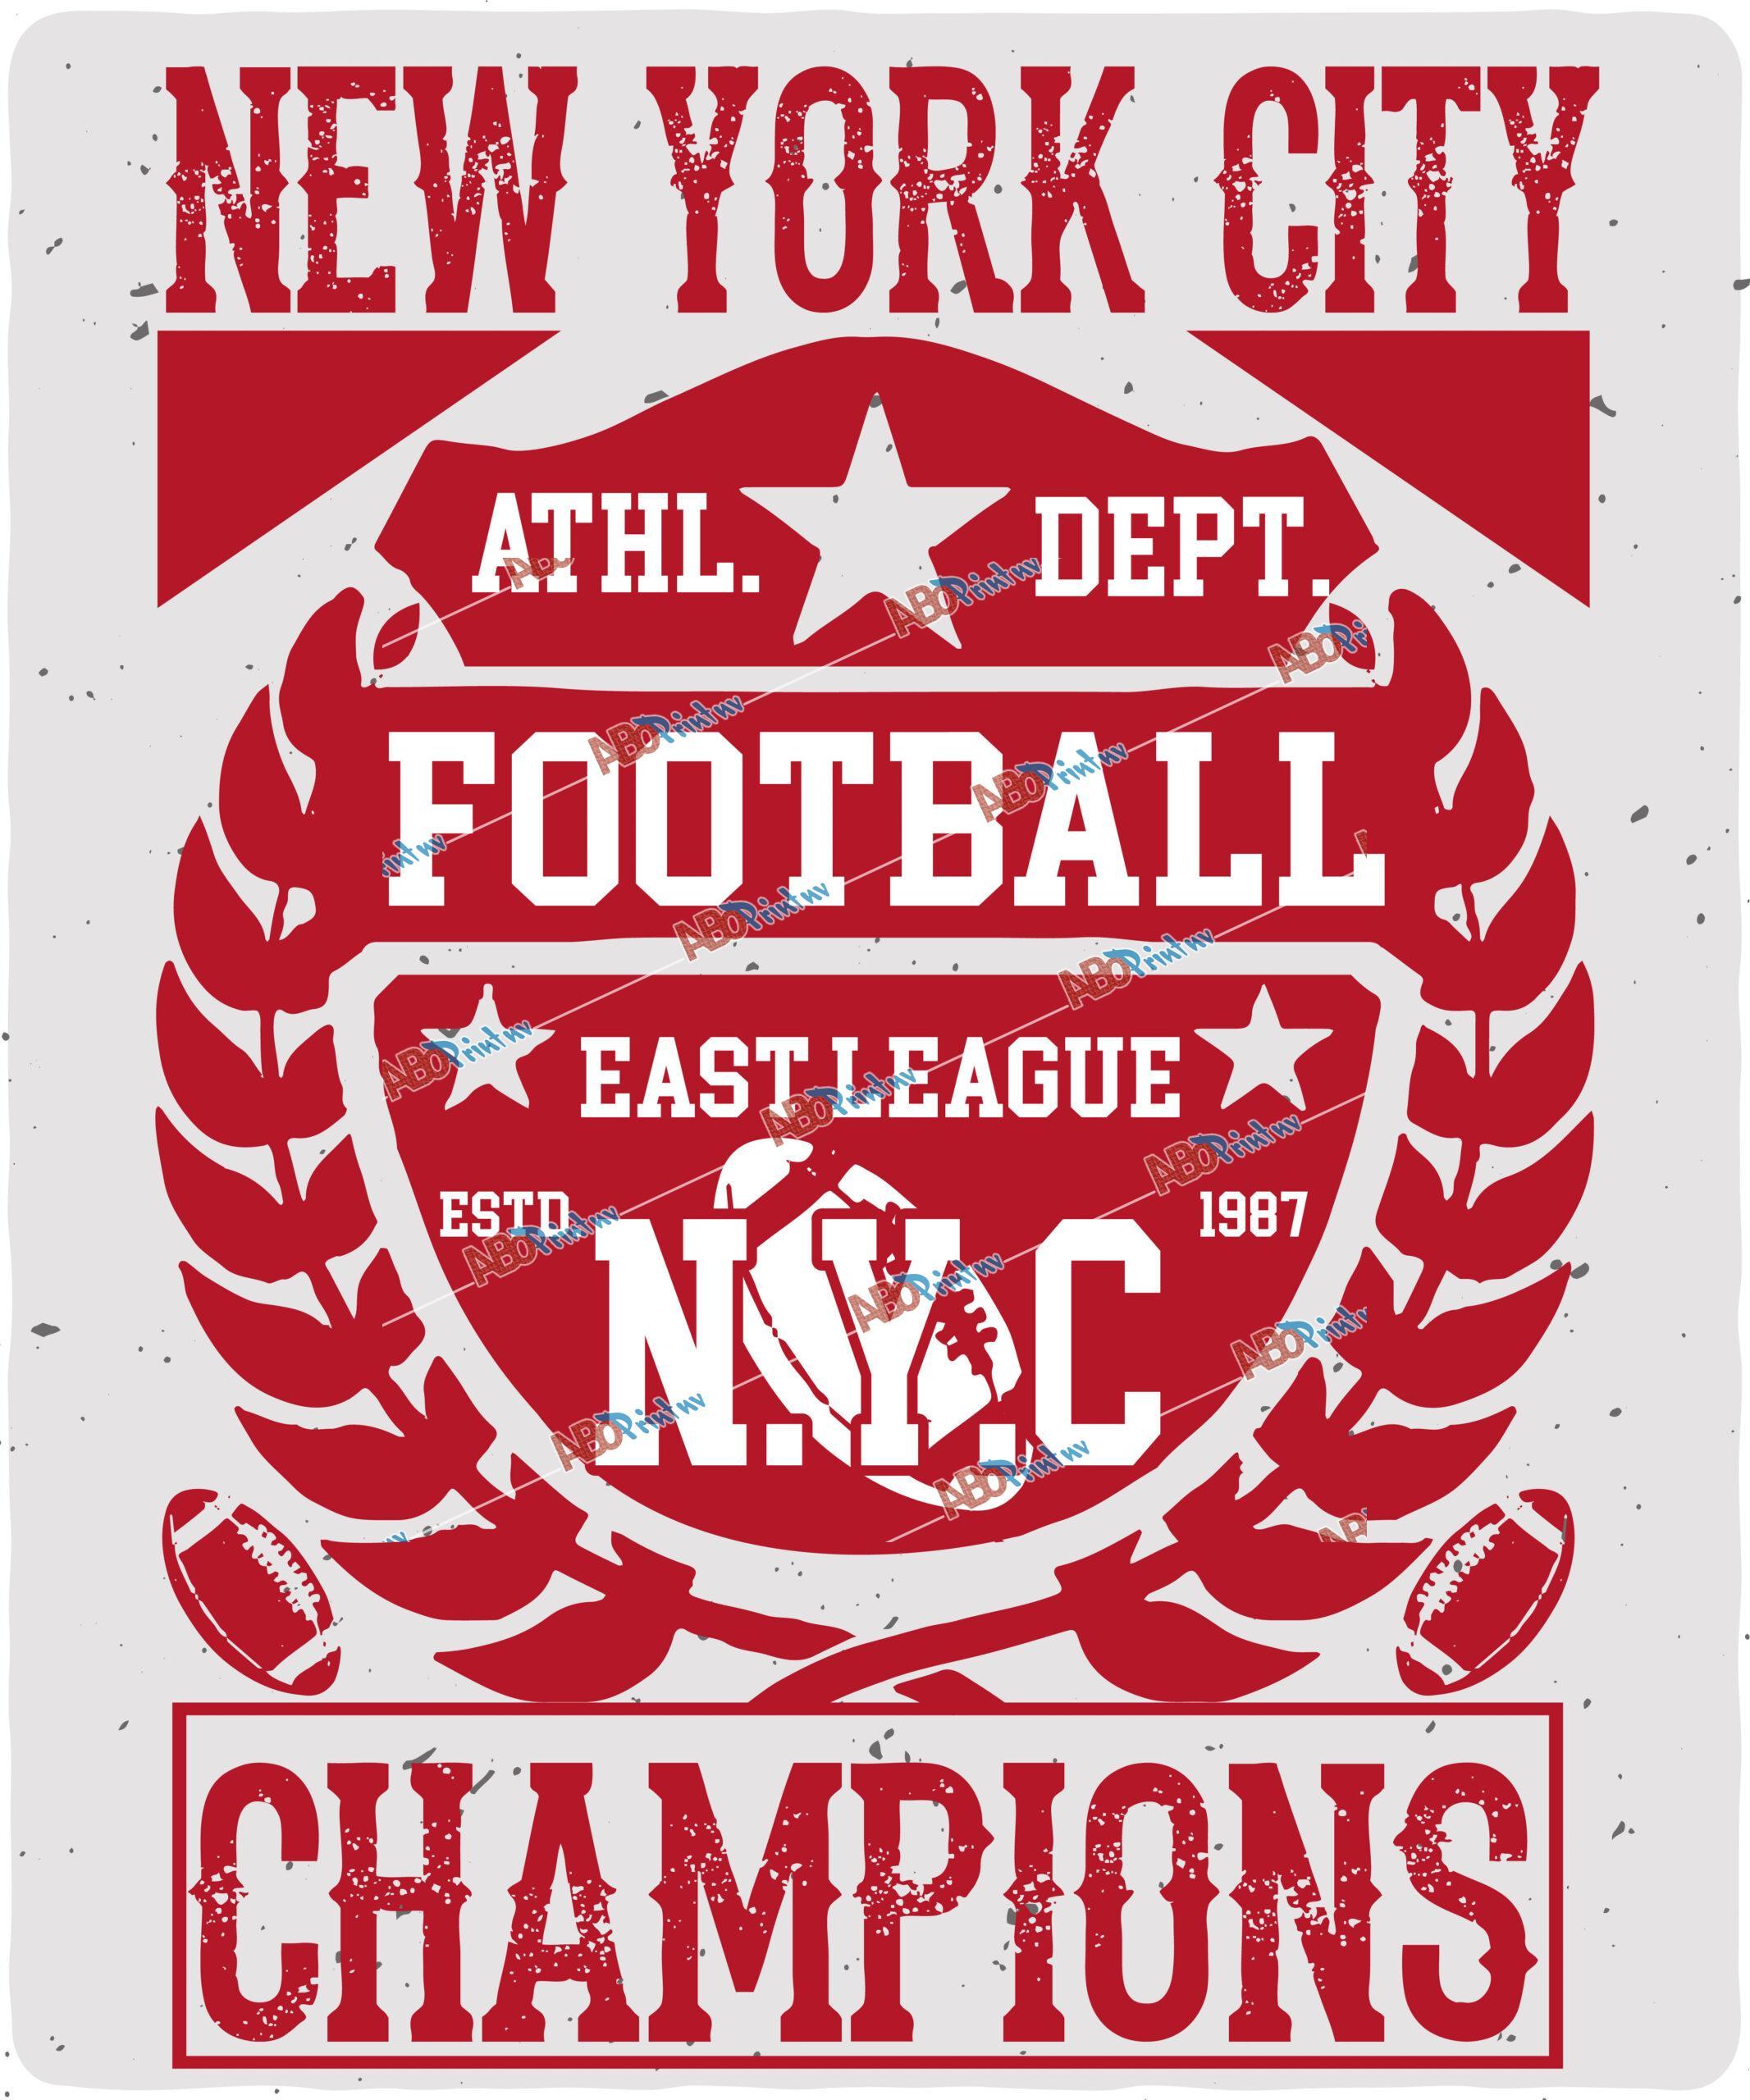 New york city athl.football.dept.